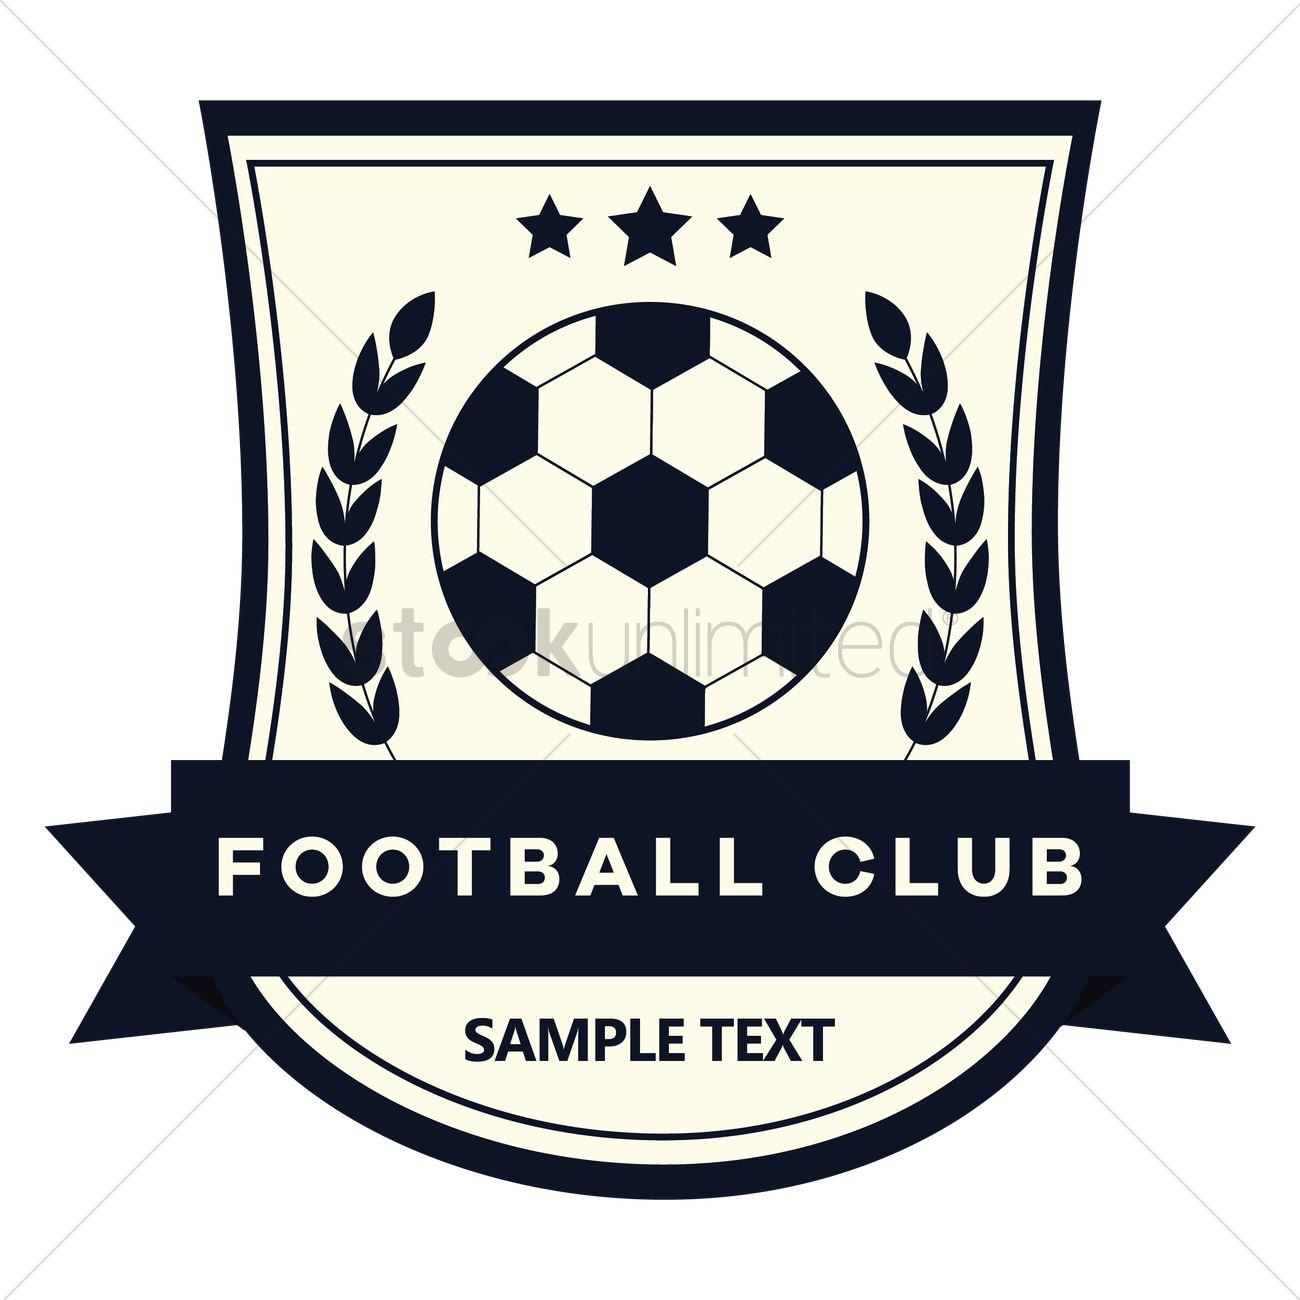 Black and White Football Logo - Football club logo Vector Image - 1527032 | StockUnlimited